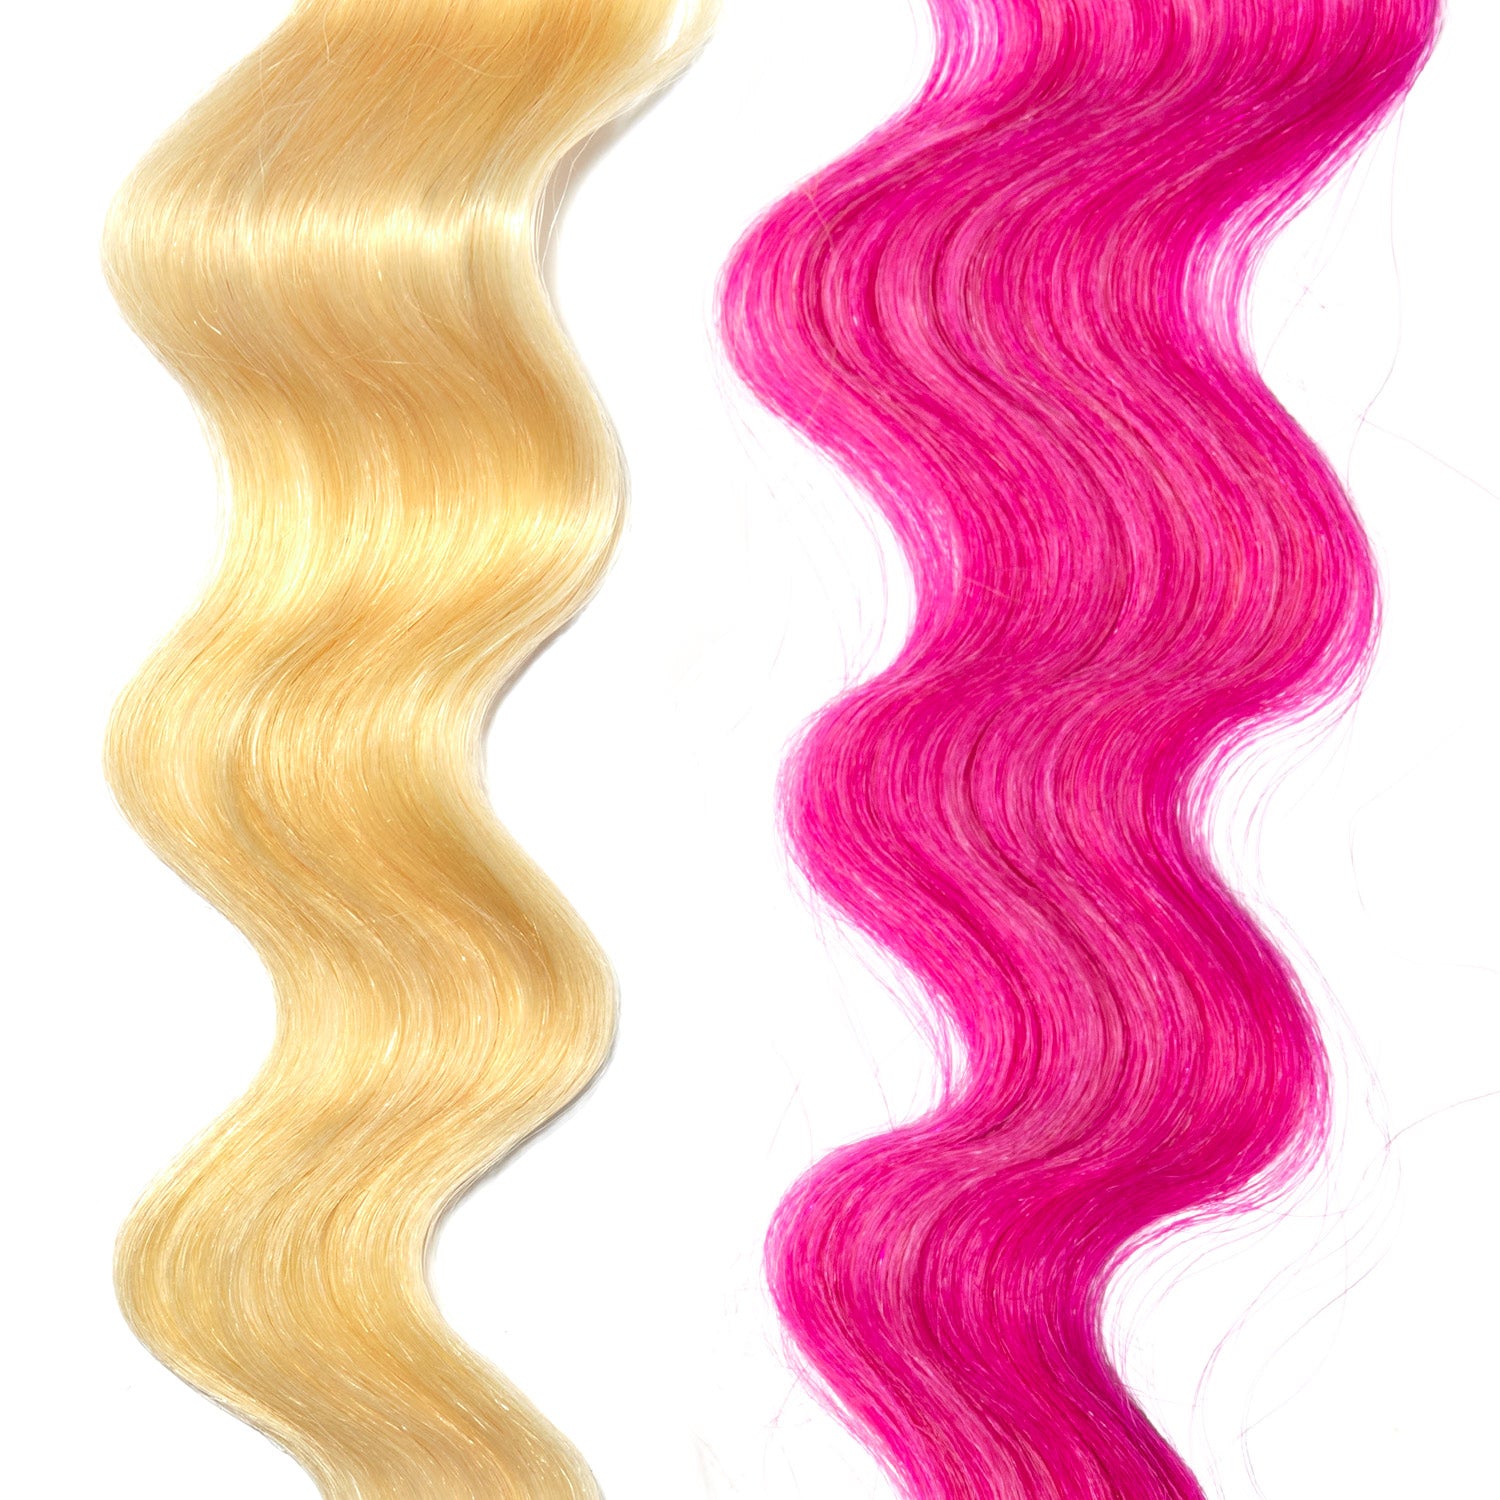 bright magenta pink hair color on platinum blonde hair